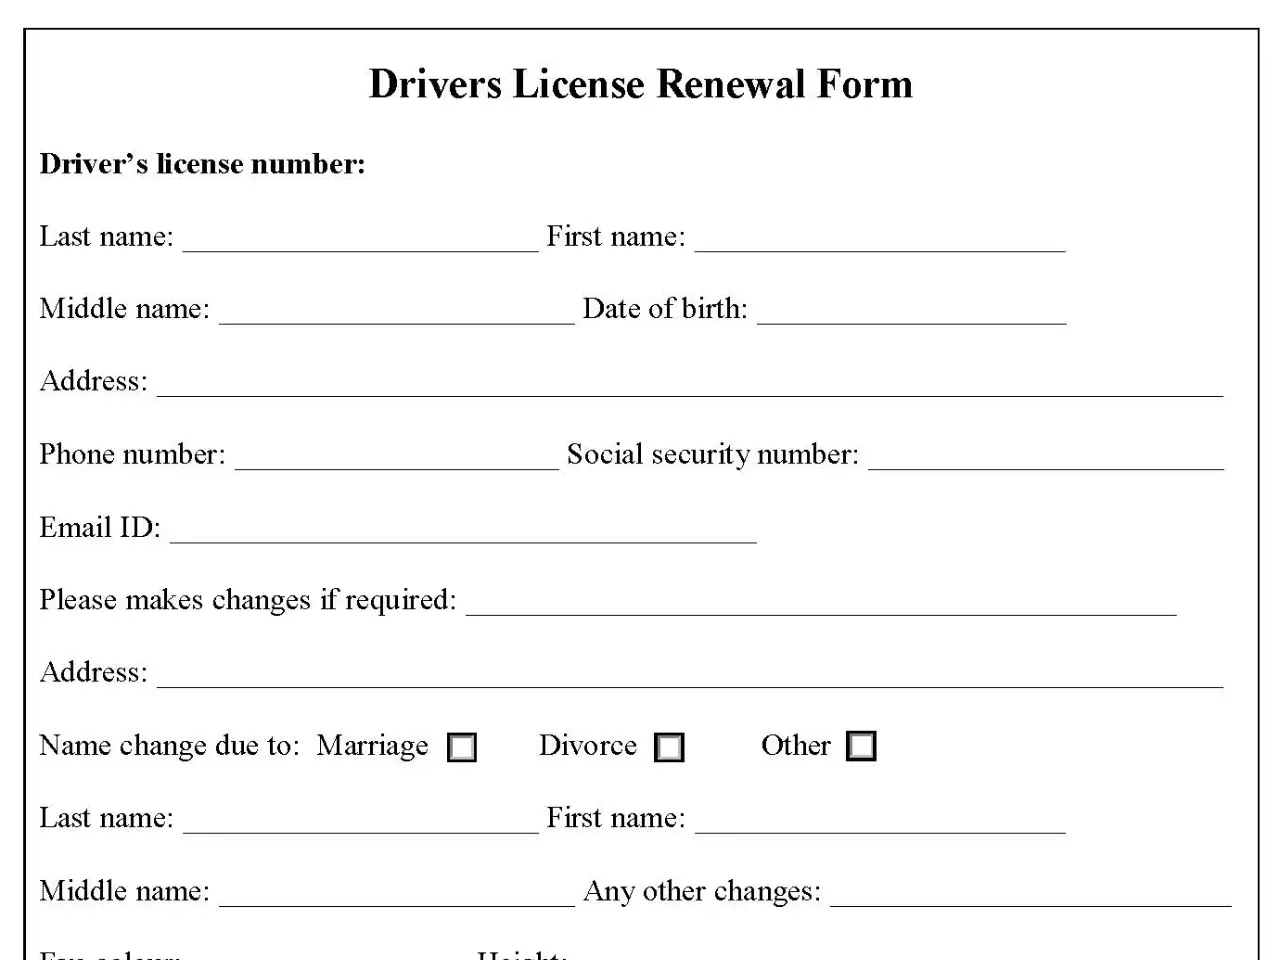 Drivers License Renewal Form